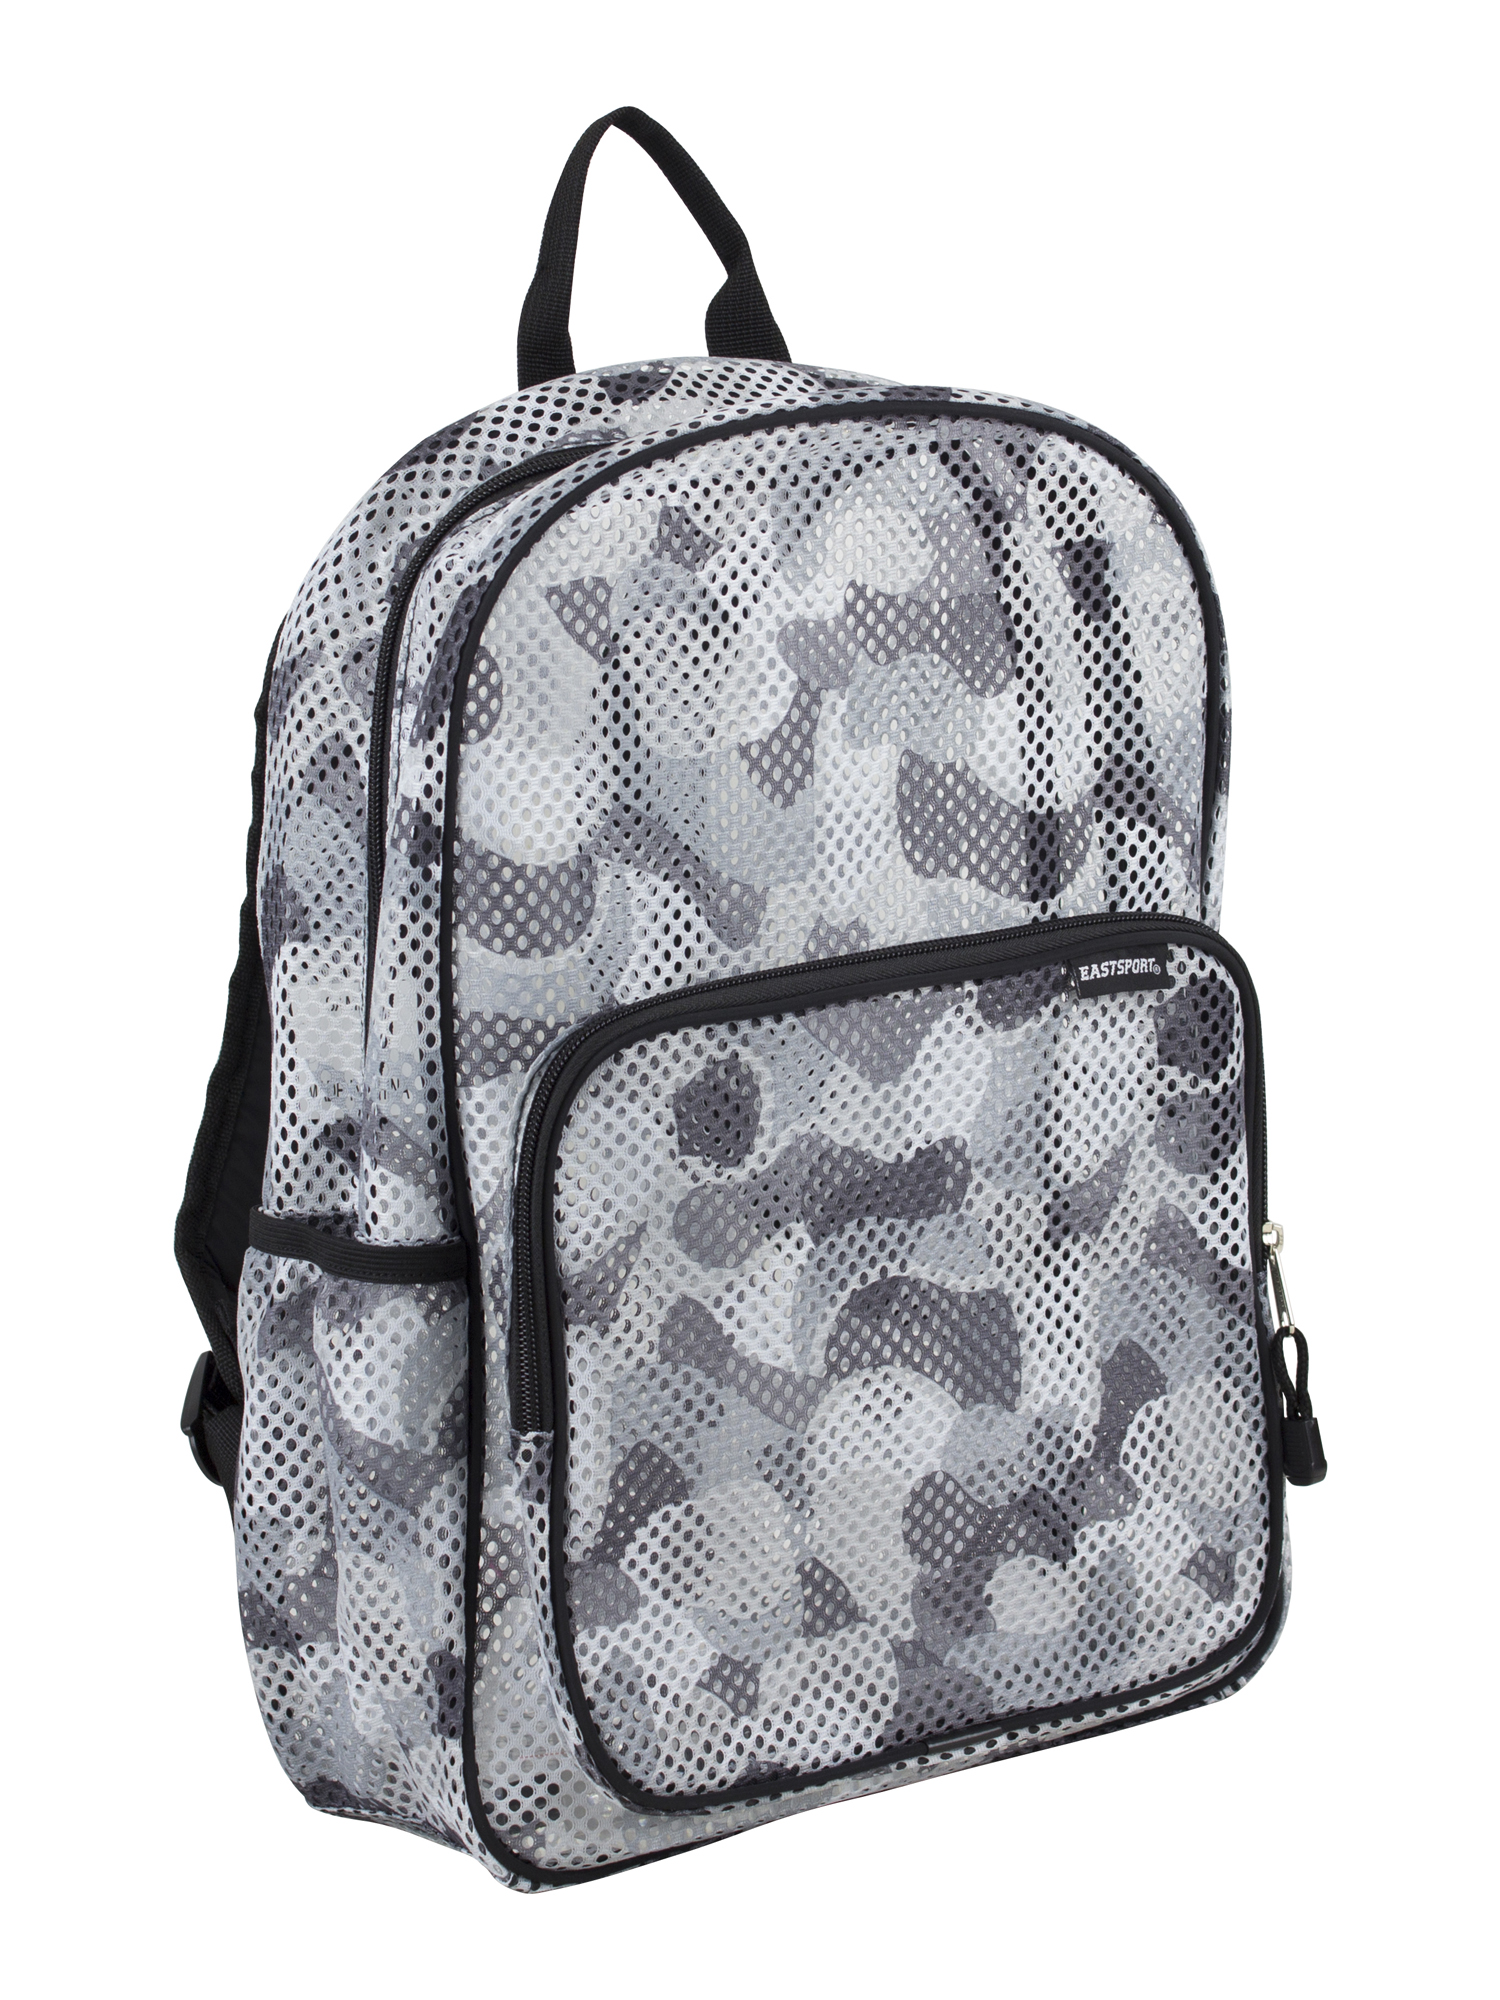 Eastsport Unisex Spirit Mesh Backpack, Grey Cartoon Camouflage Print - image 1 of 6